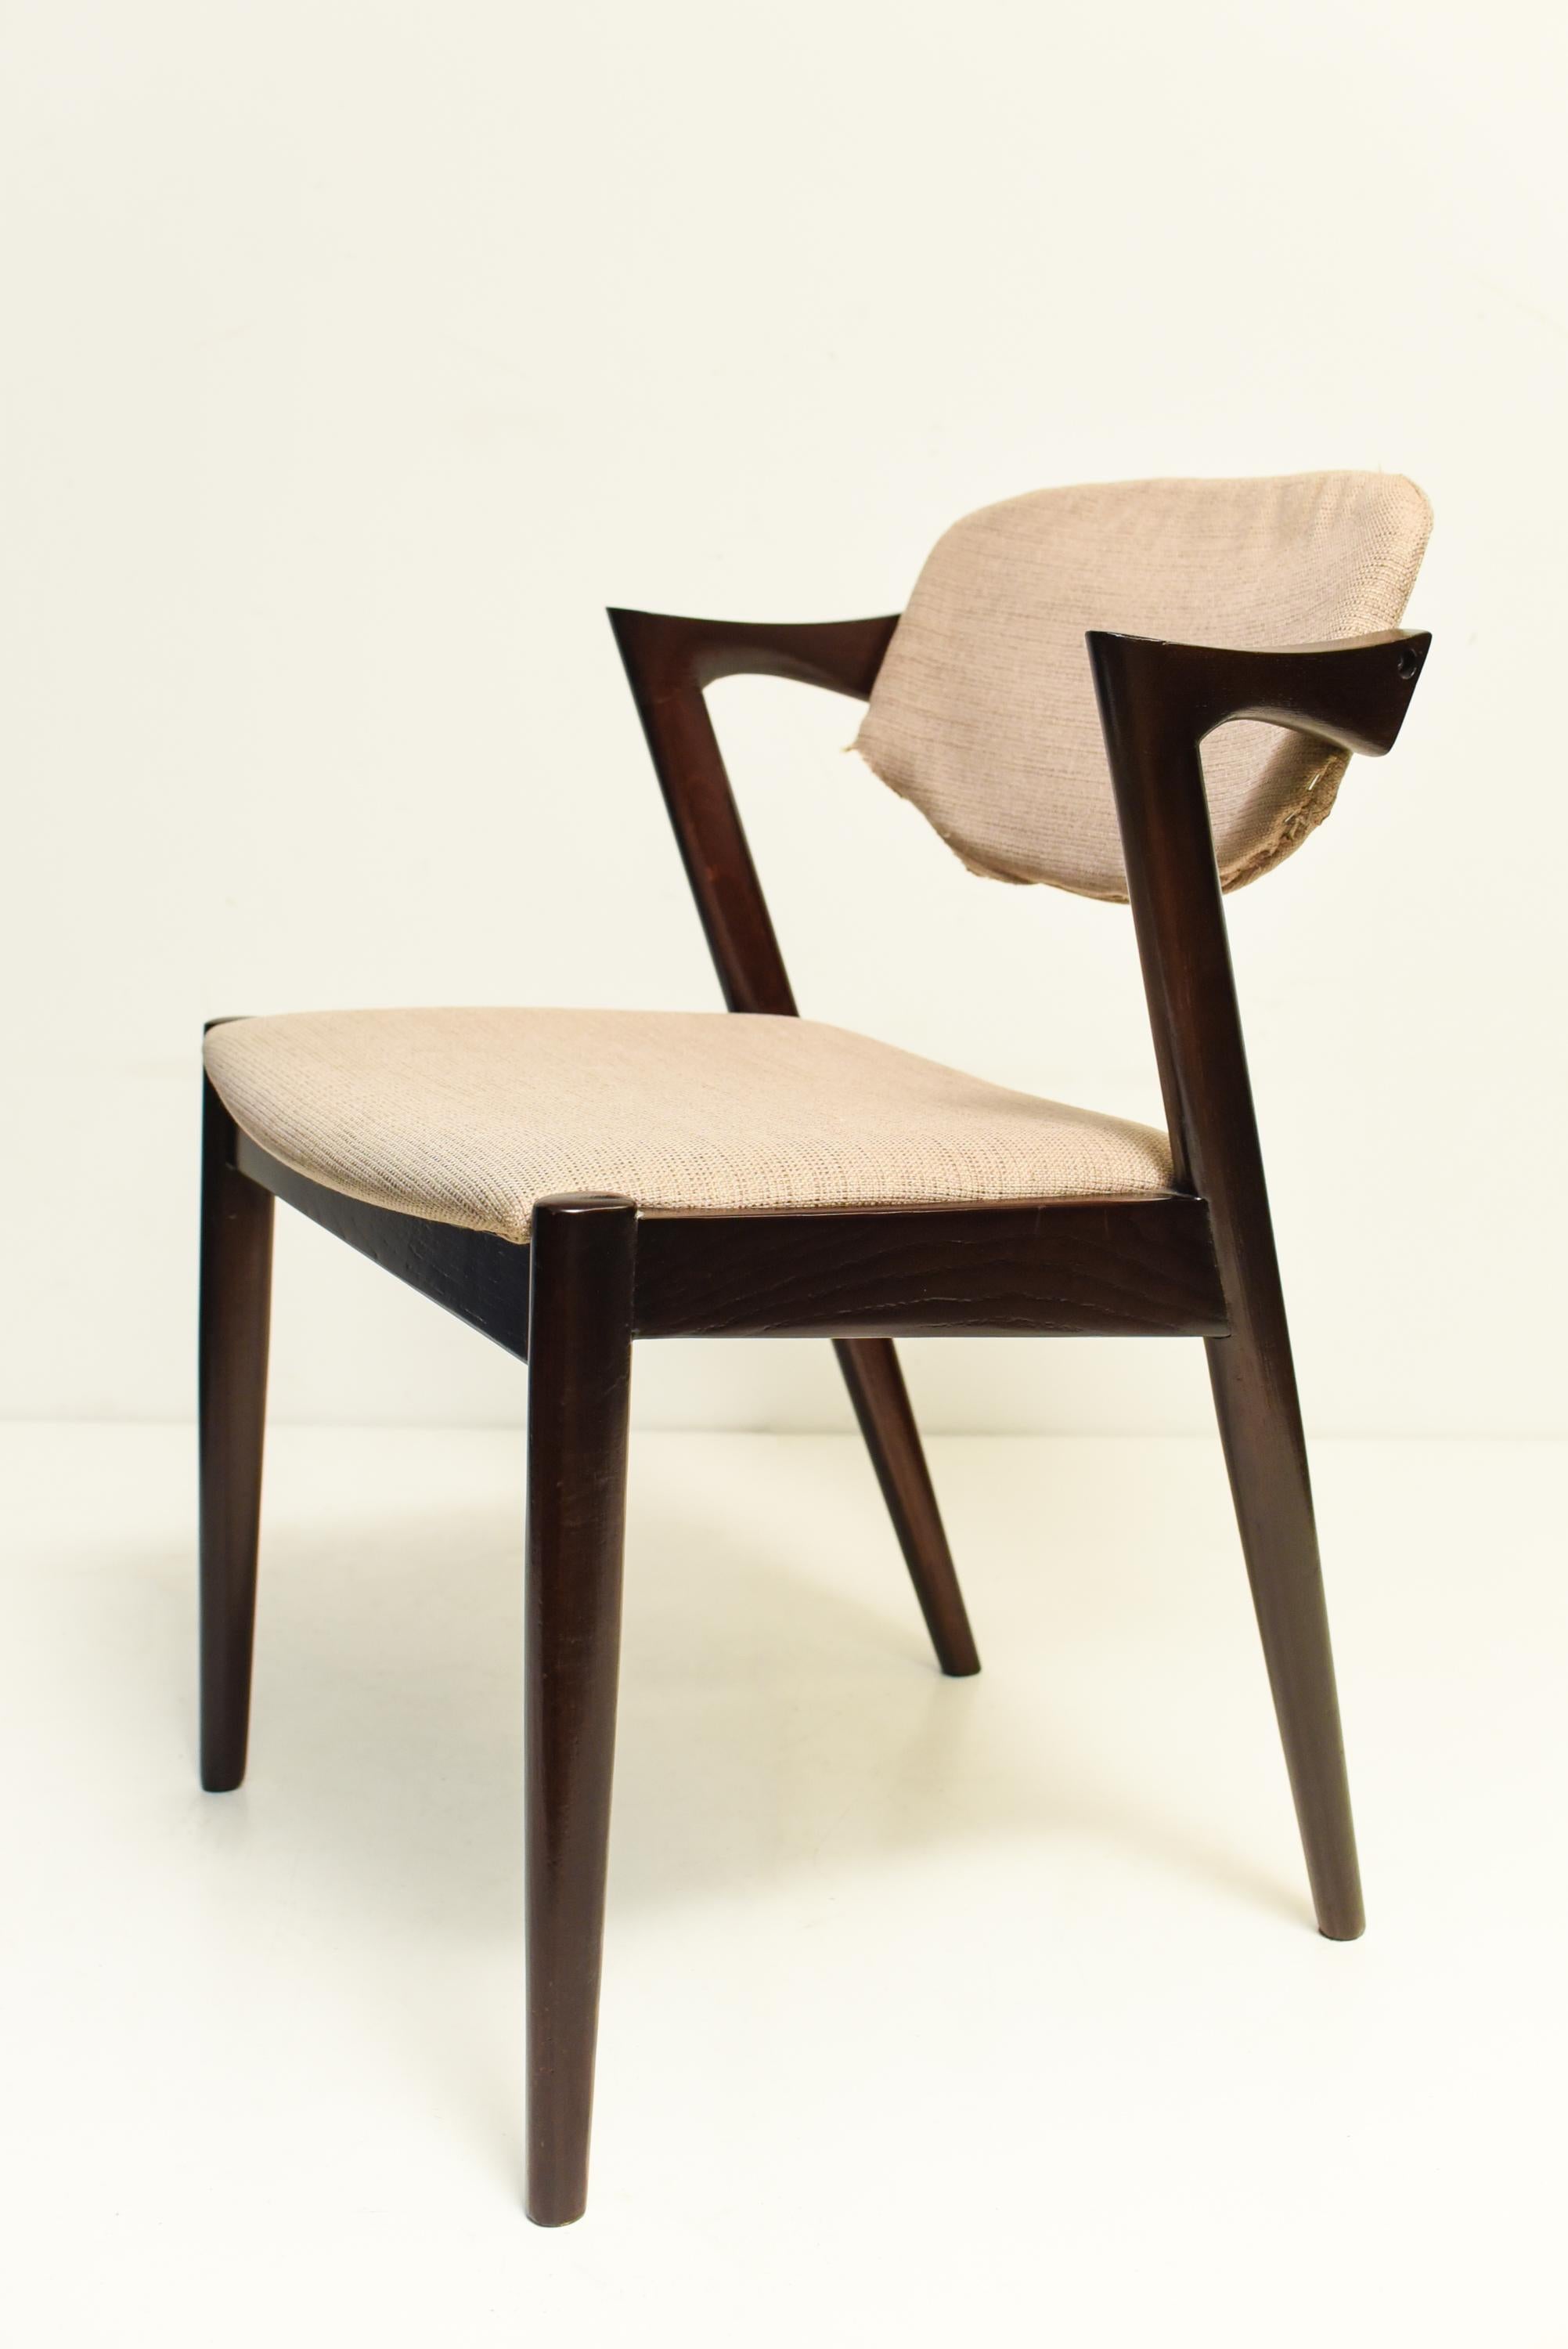 Mid Century Kai Kristiansen swivel model 42 chair in oakwood, 1960s.
 